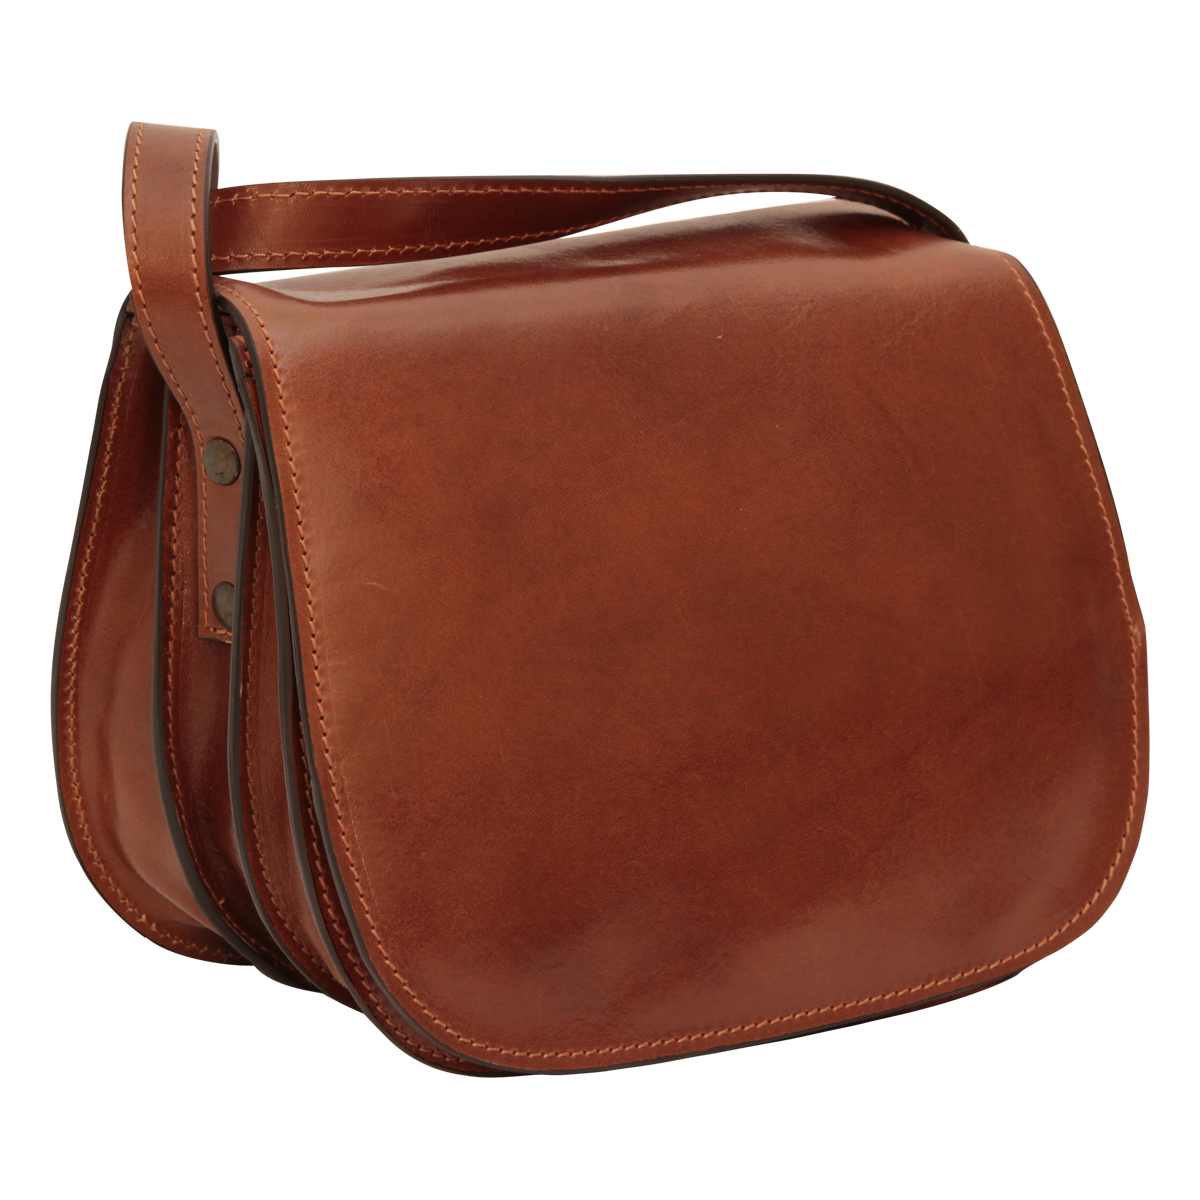 Full grain calfskin shoulder bag - brown | 209805MA US | Old Angler Firenze